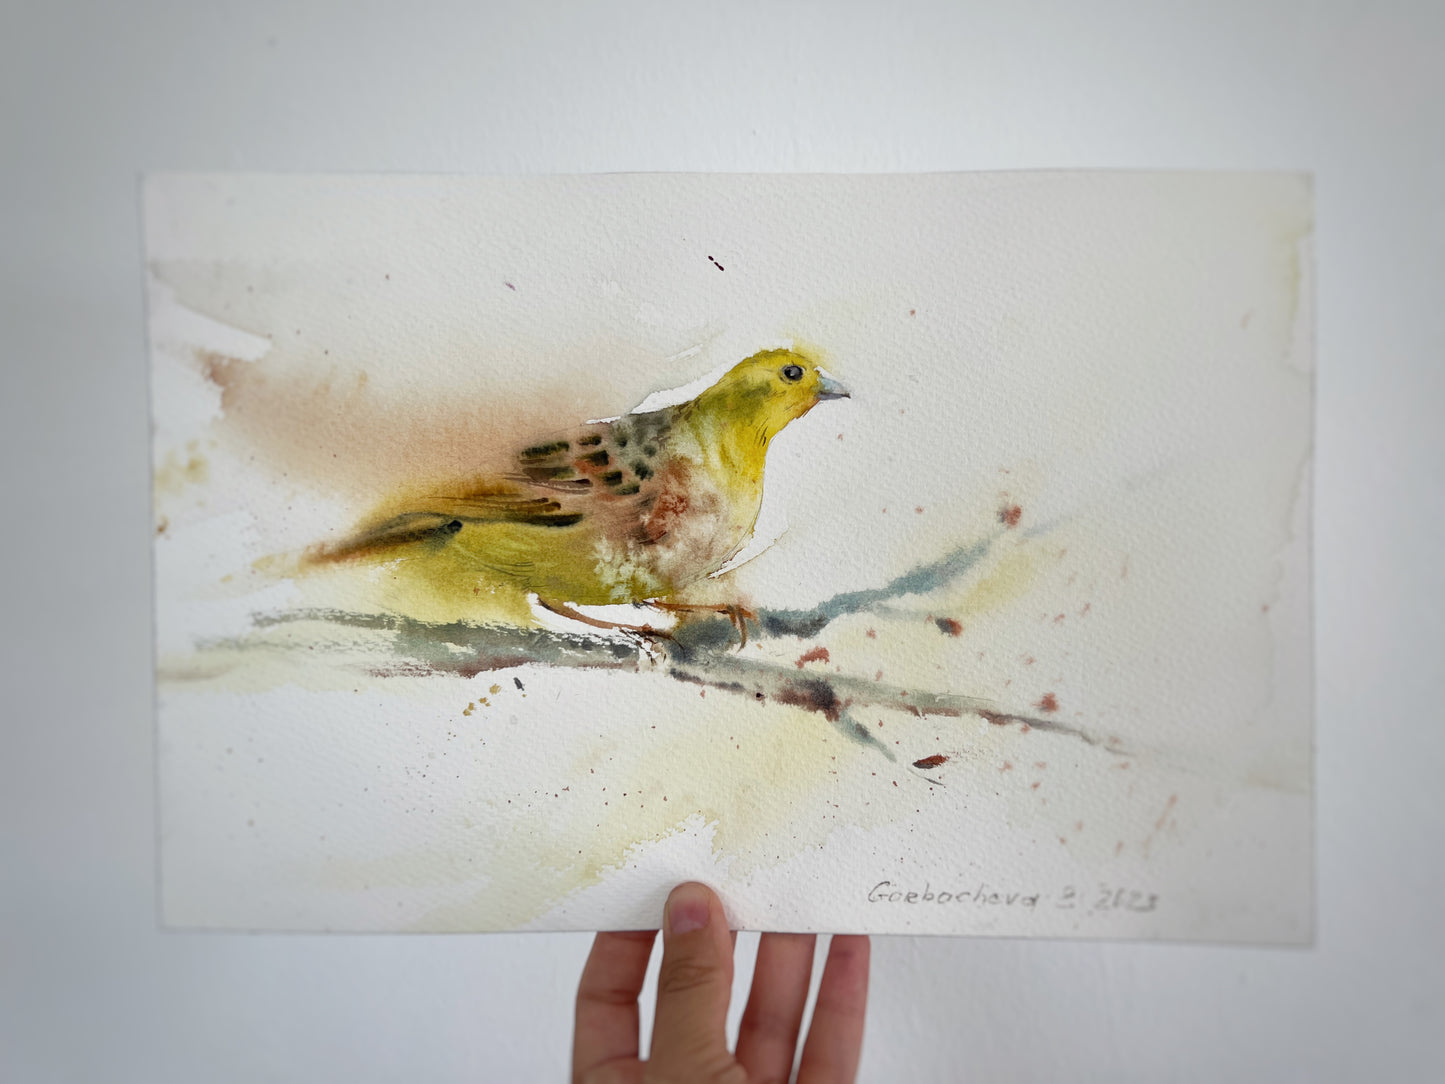 Yellow Bird Art, Original Watercolor Painting of a Tropical Bird, Perfect Art for Home Decor, Unique Home Decor Gift